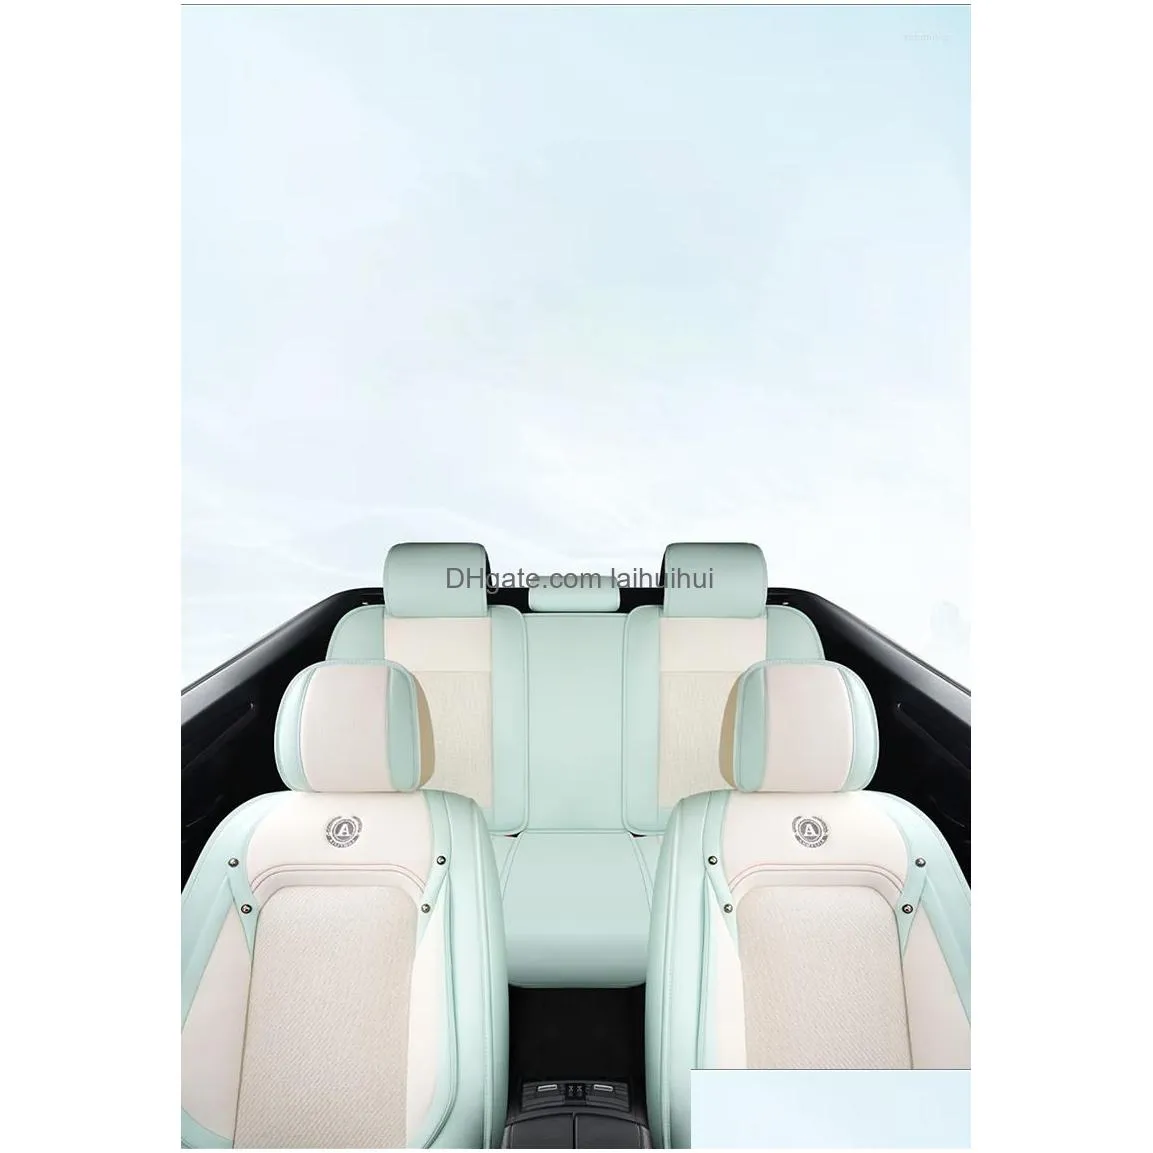 car seat covers full set for i30 ix35 i40 i20 tucson sonata encino interior accessories